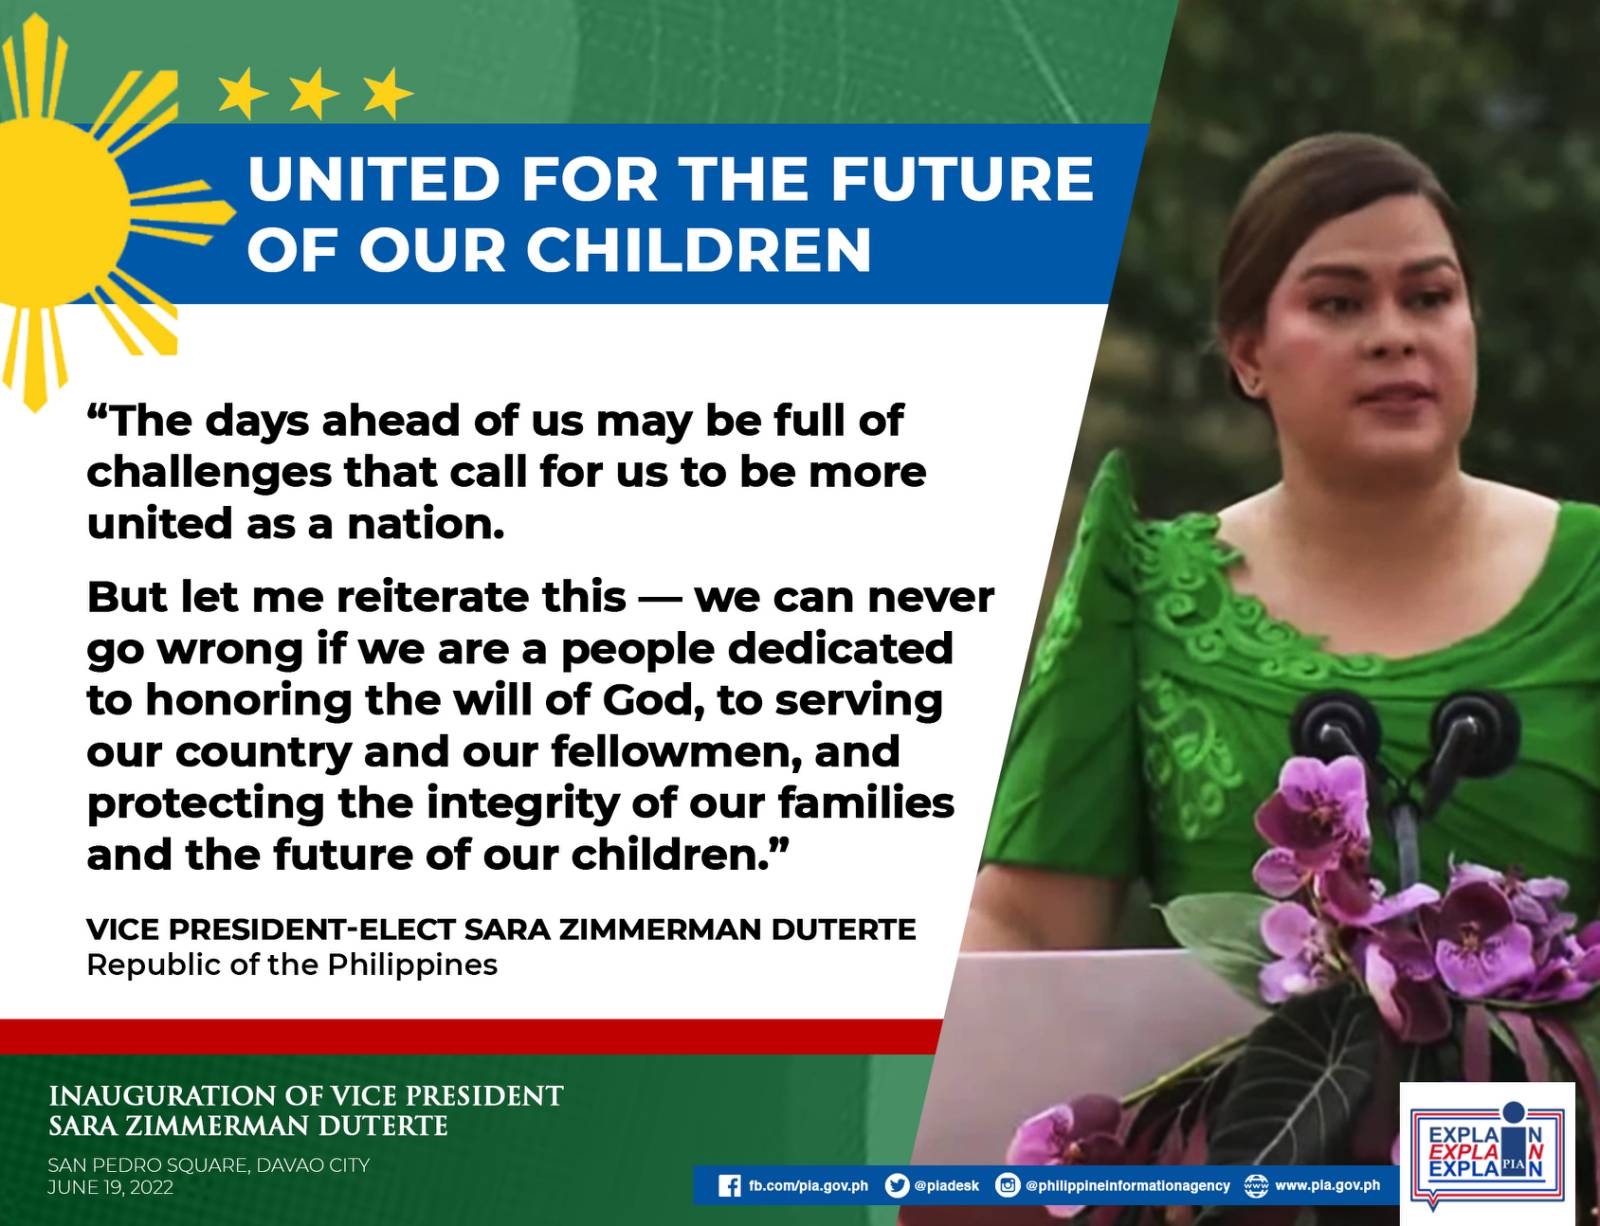 VP-elect Sara Zimmerman Duterte calls for unity